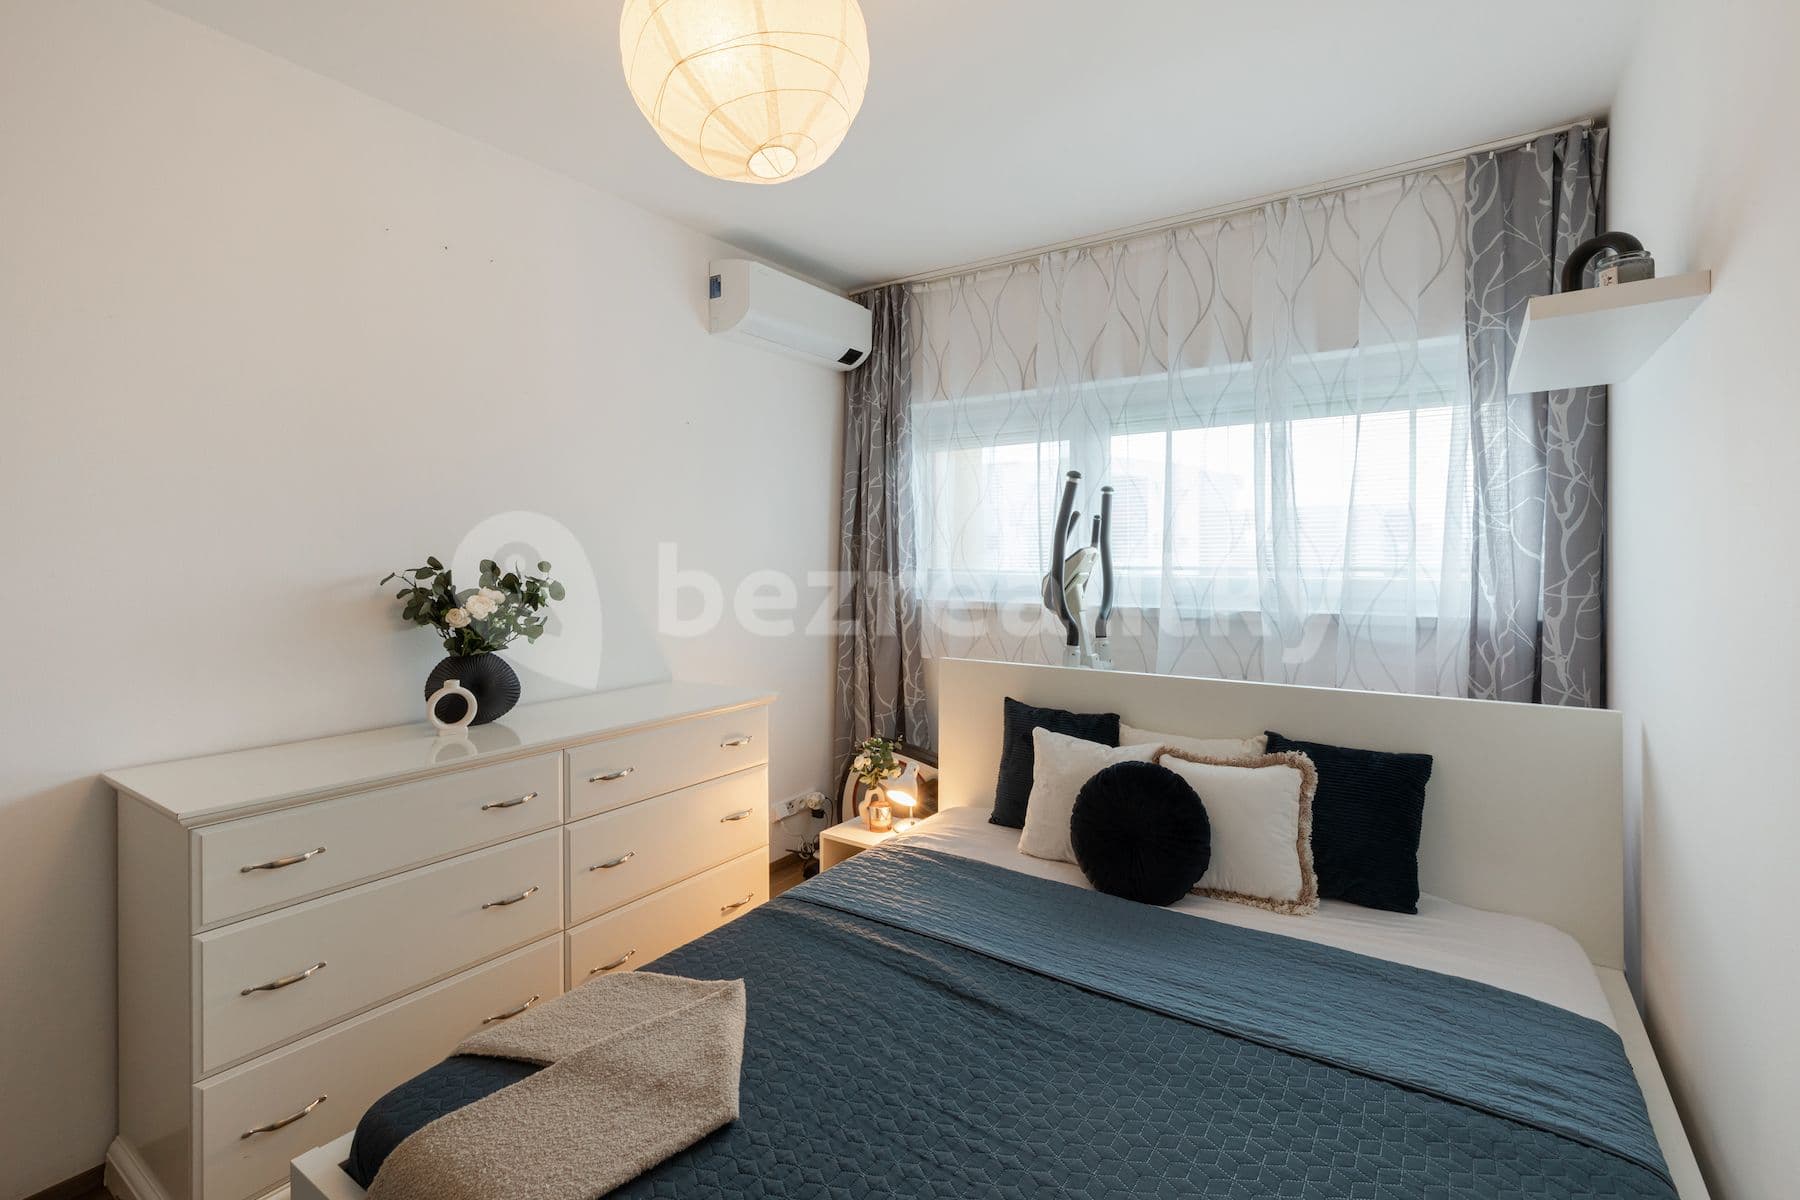 2 bedroom with open-plan kitchen flat for sale, 84 m², Miroslava Hajna, Prague, Prague